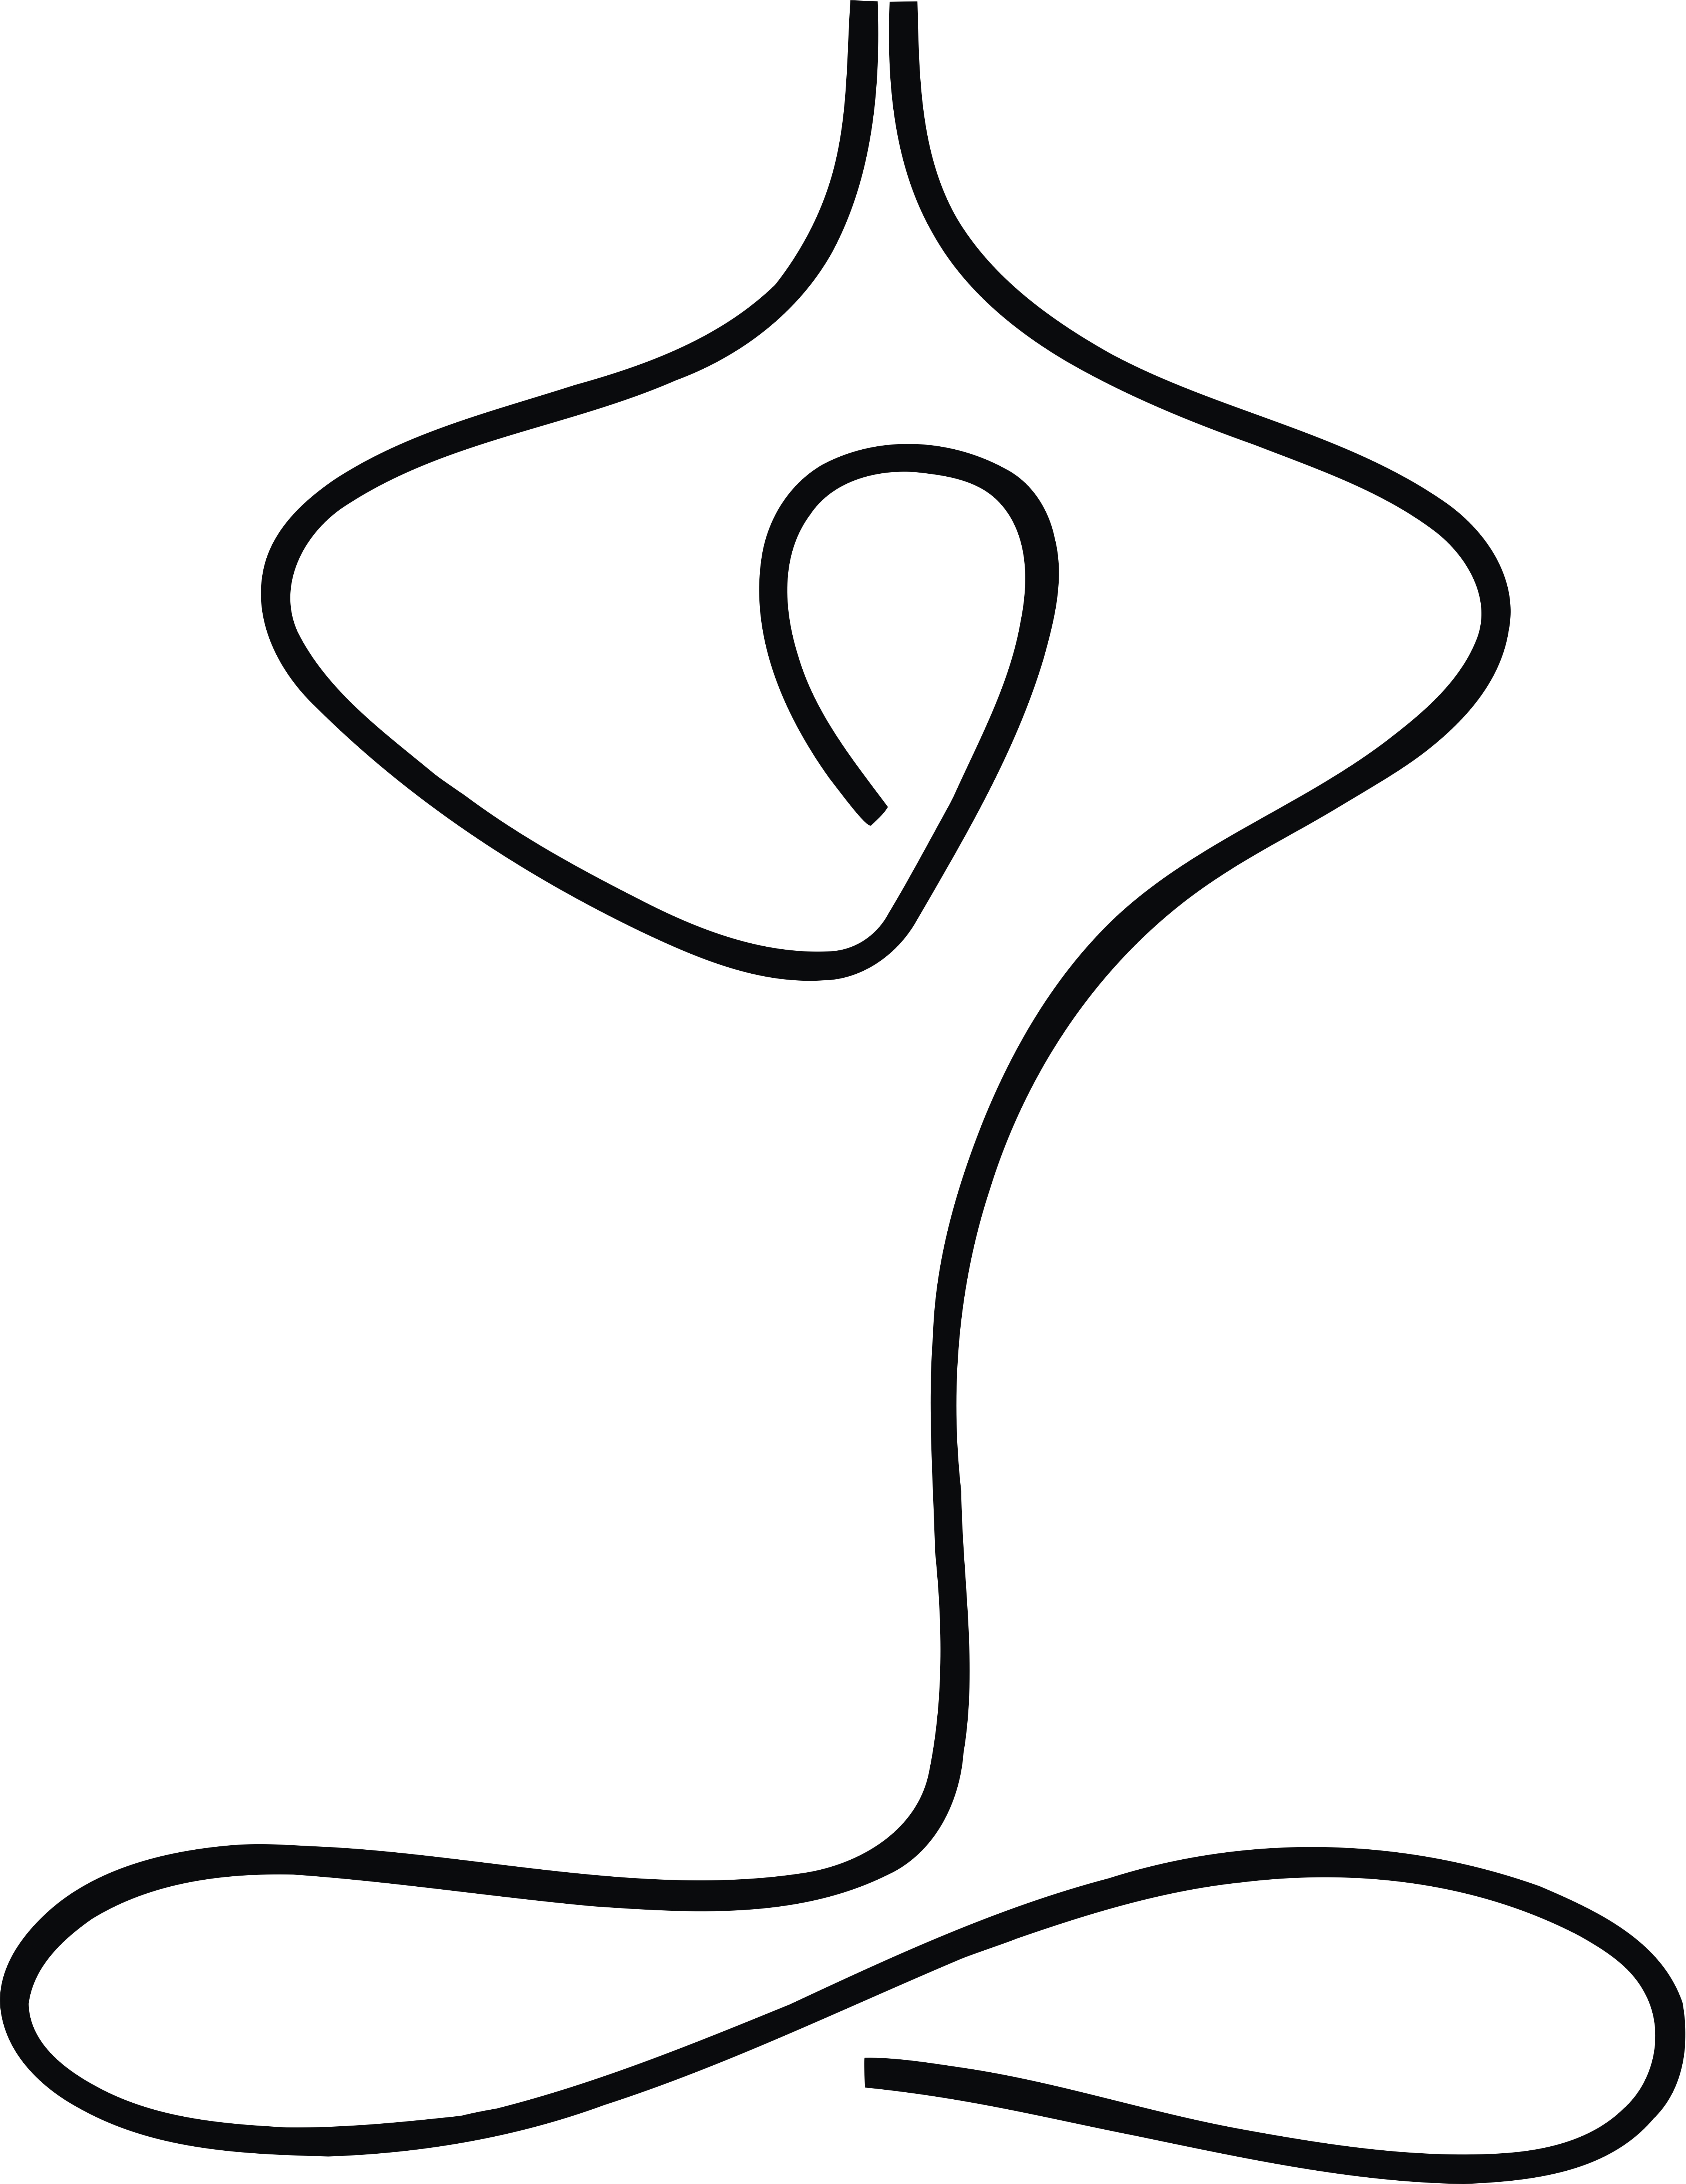 KarMa Yoga